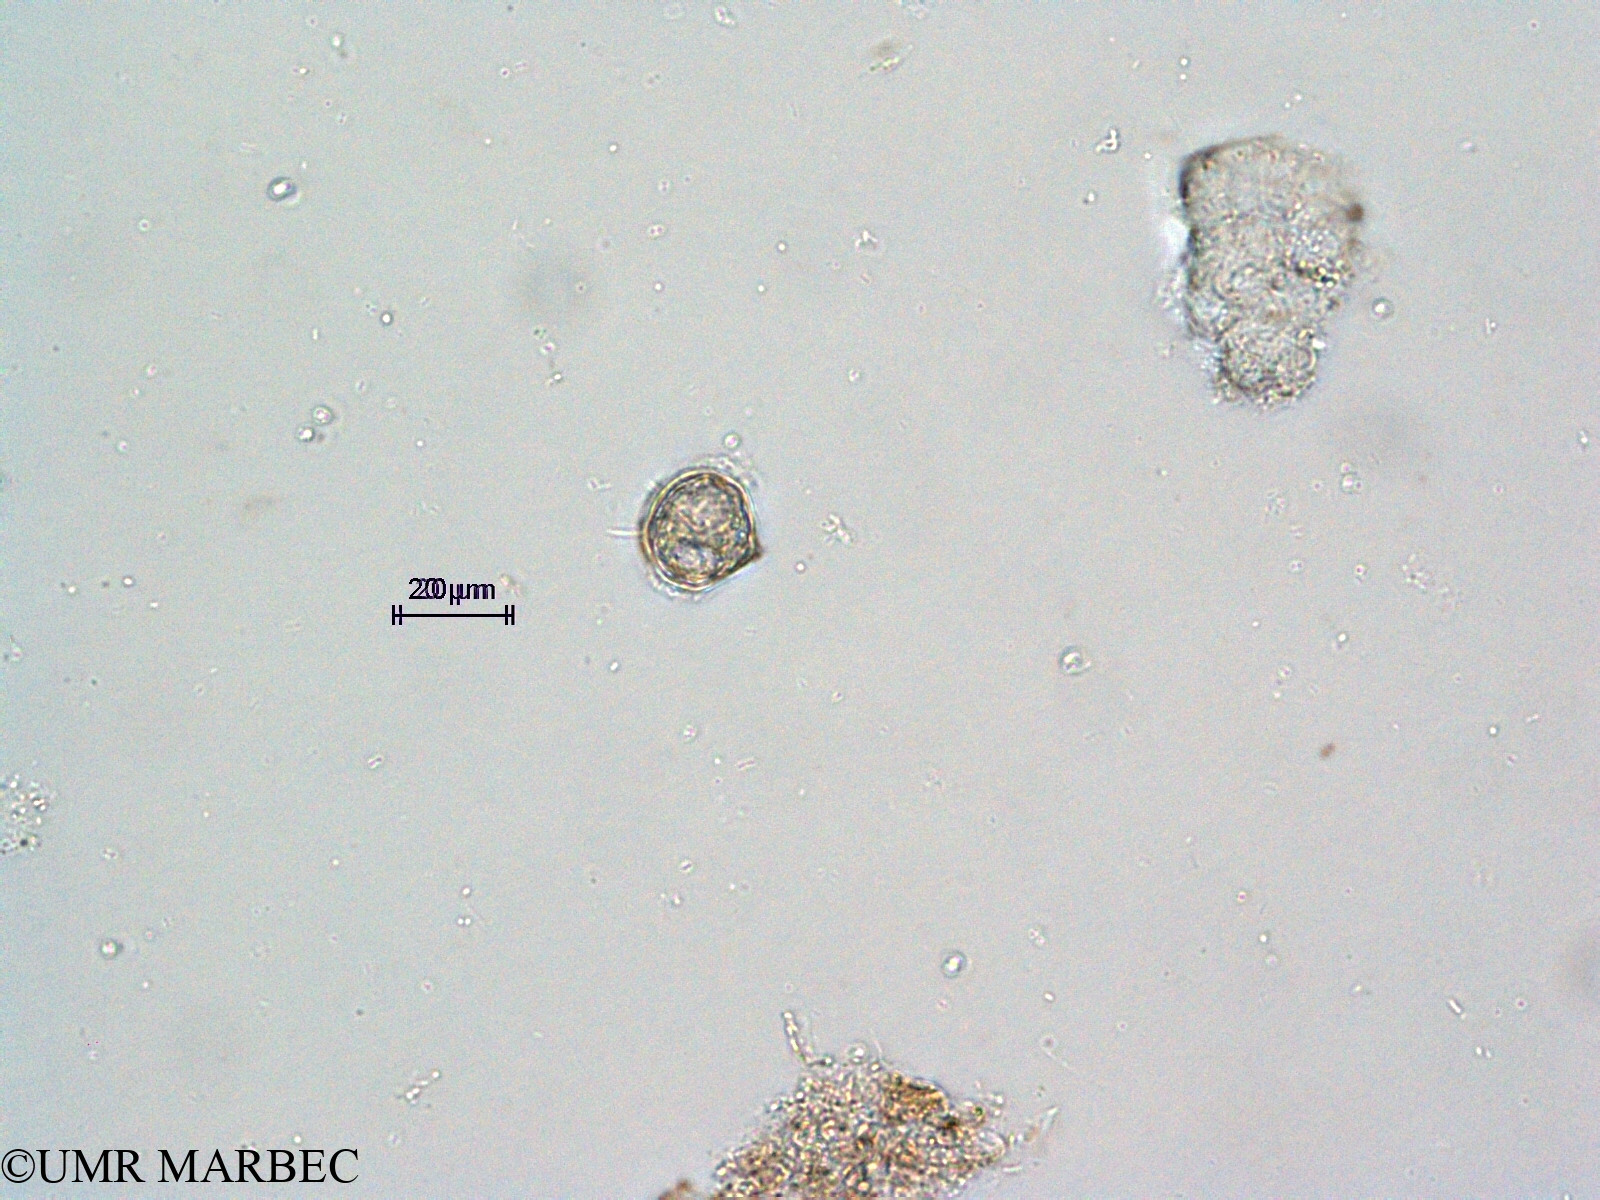 phyto/Scattered_Islands/all/COMMA April 2011/Protoperidinium steinii (ancien Protoperidinium 21 recomposé)(copy).jpg